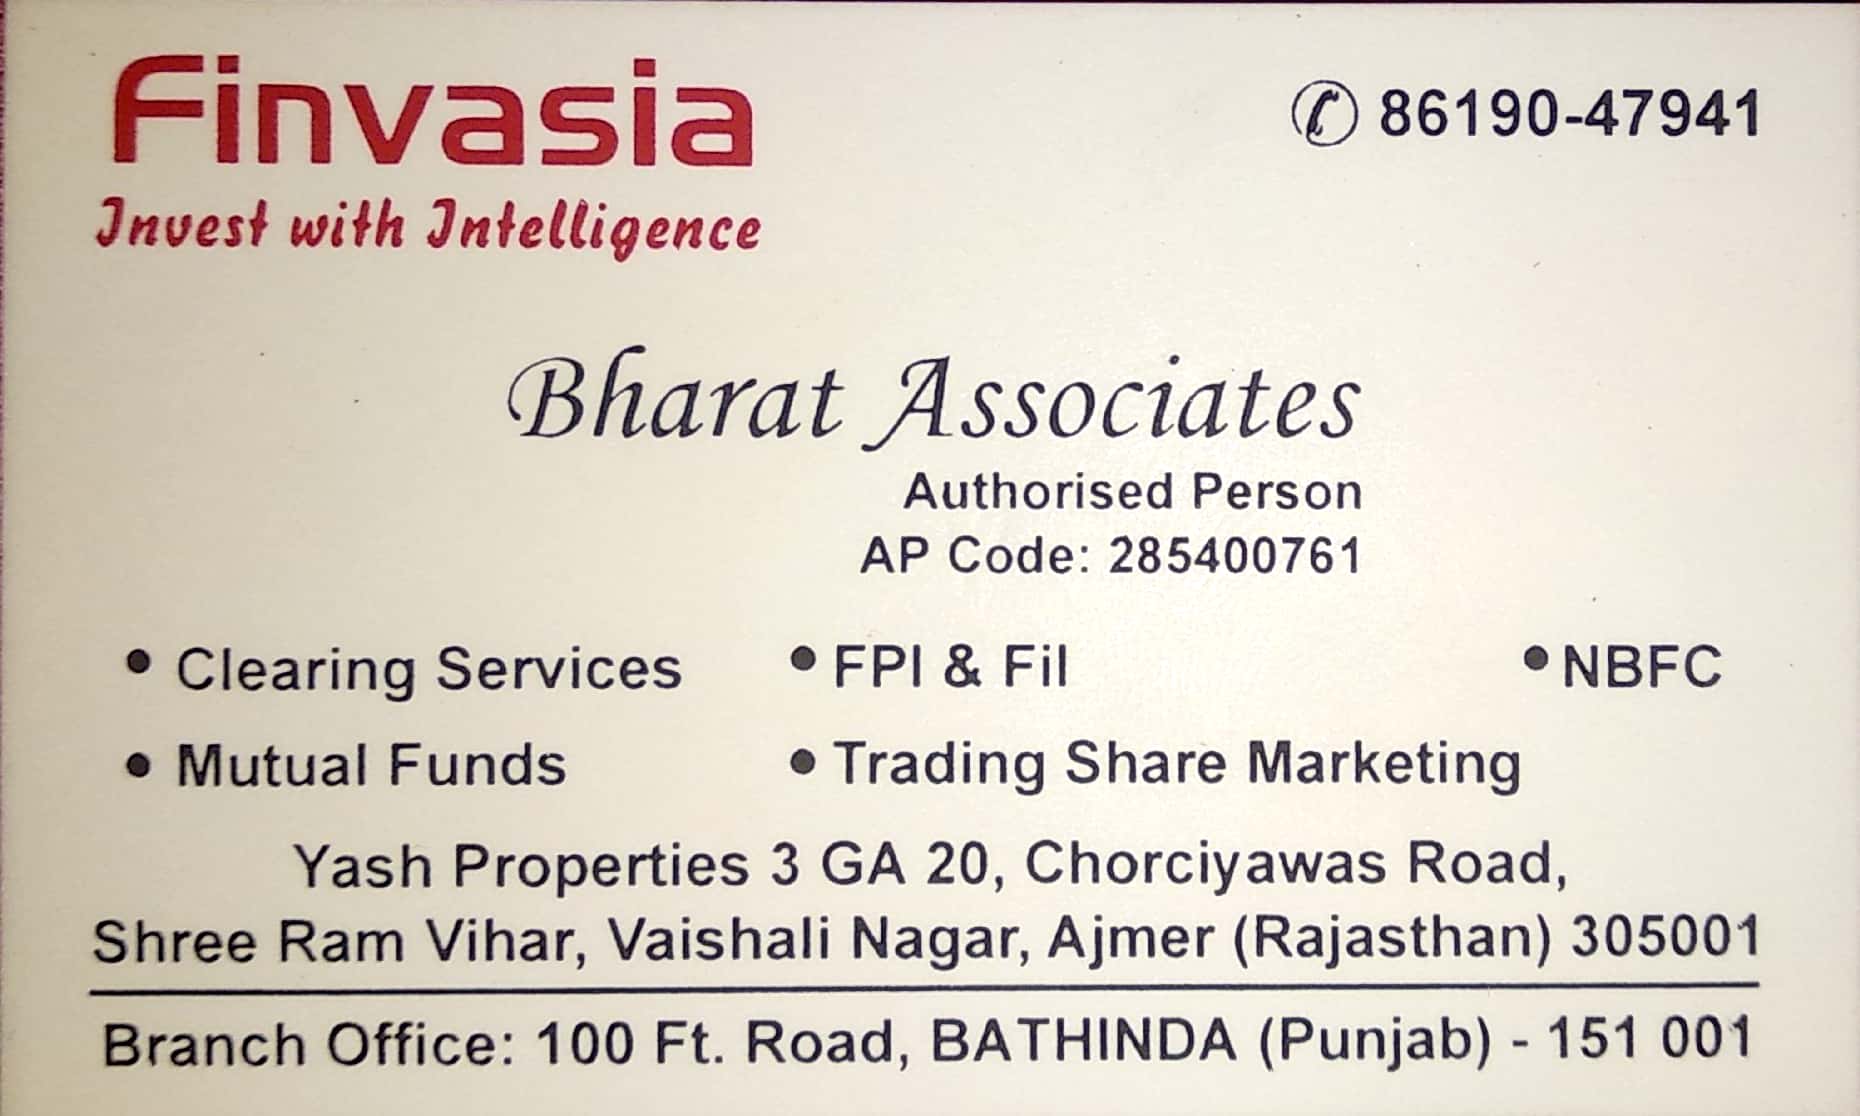 Bharat Associates